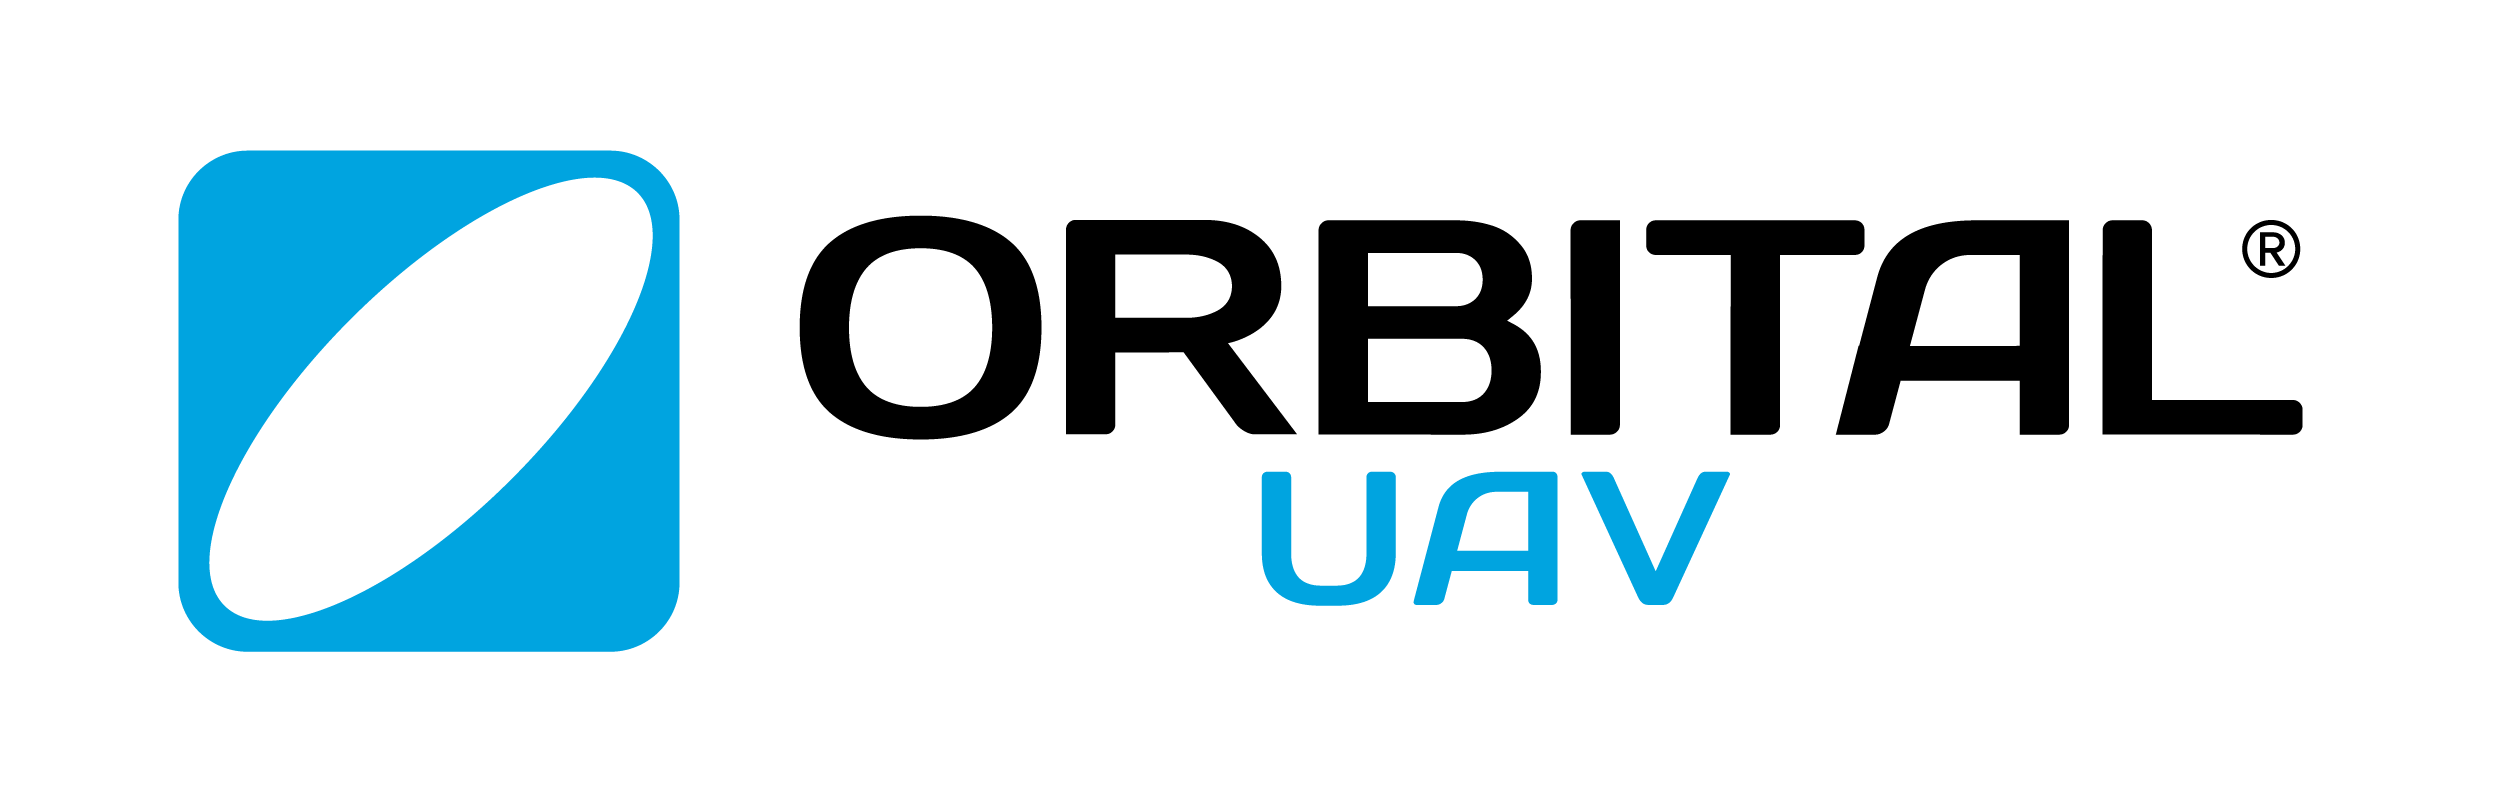 Orbital Corporation Limited Logo